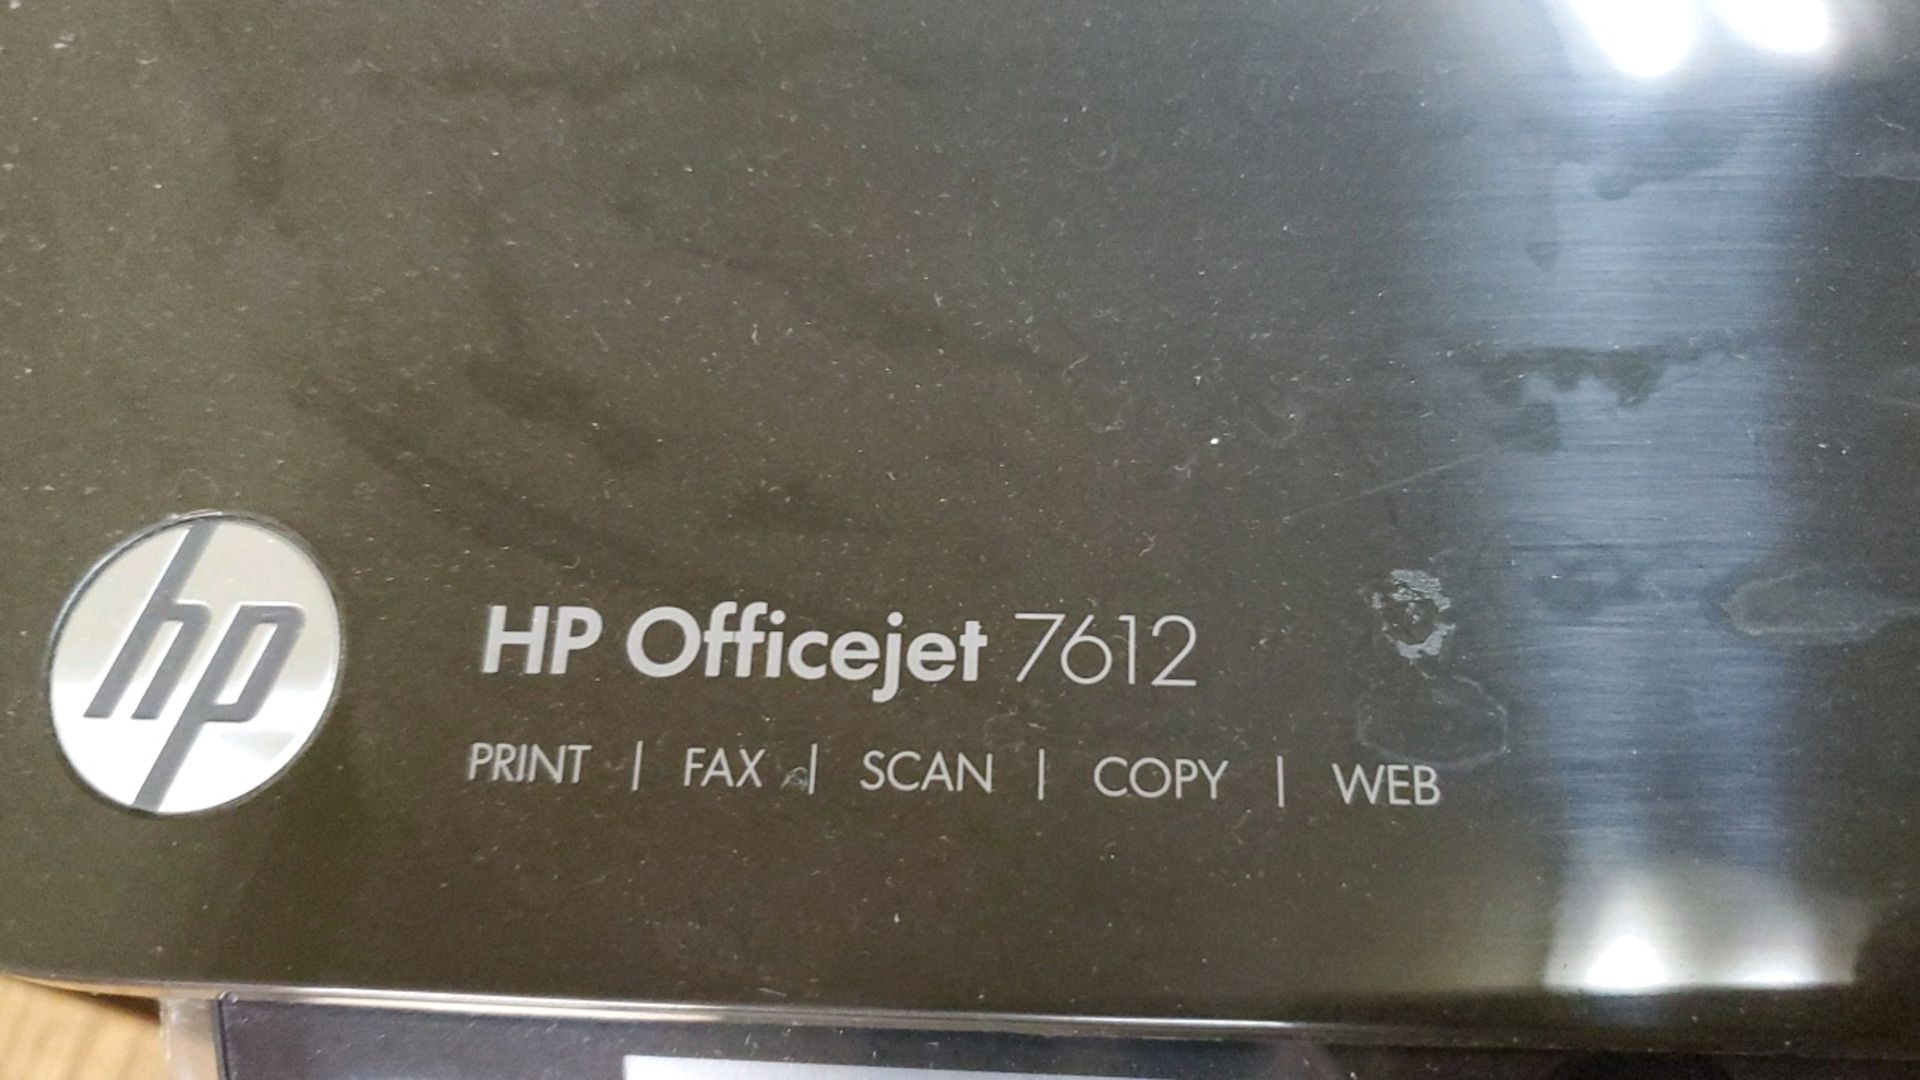 HP Officejet 7612 Printer - Image 3 of 3